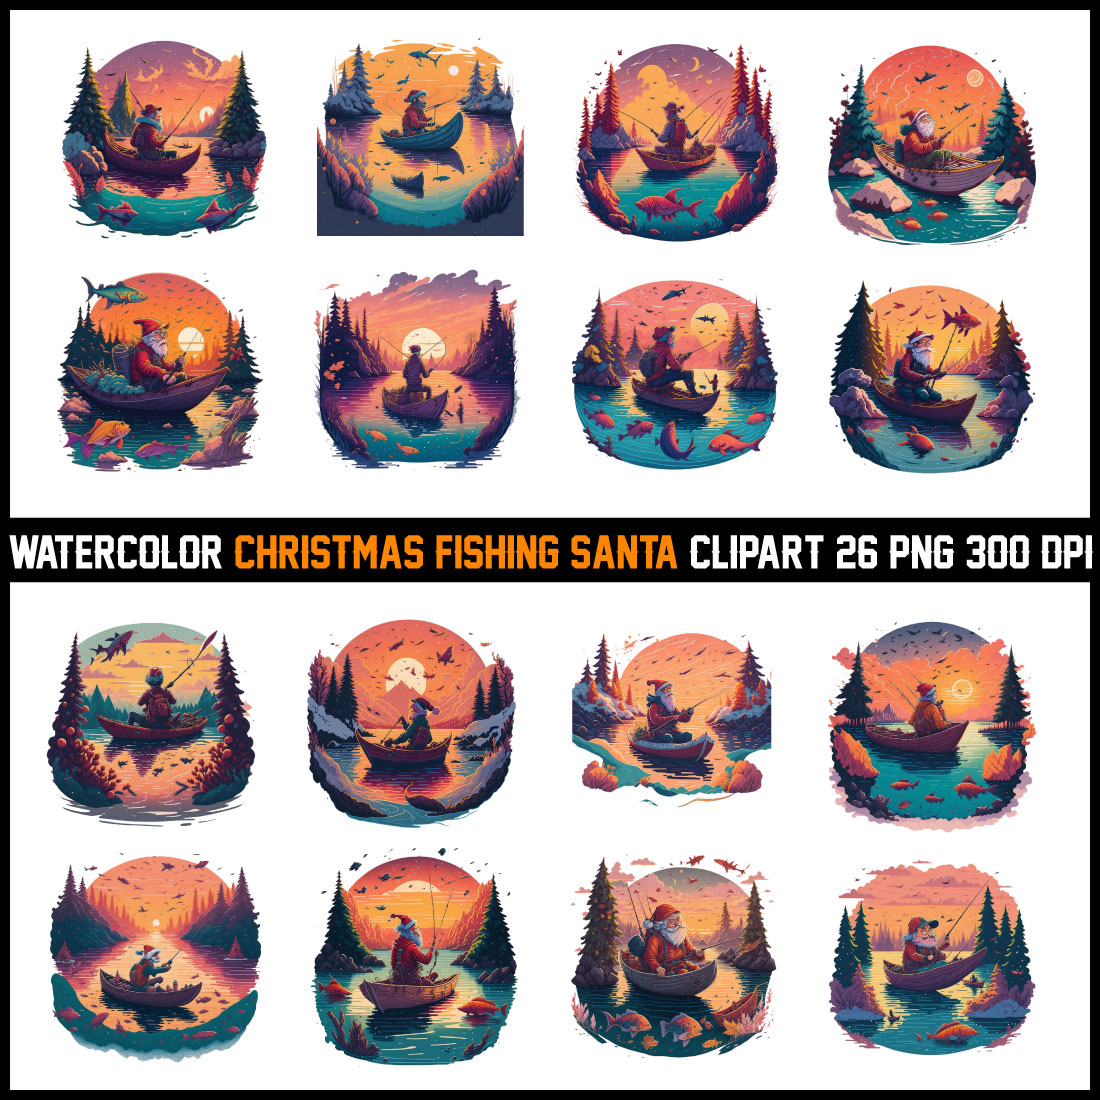 Watercolor Christmas Fishing Santa Clipart T-Shirt Design Bundle cover image.